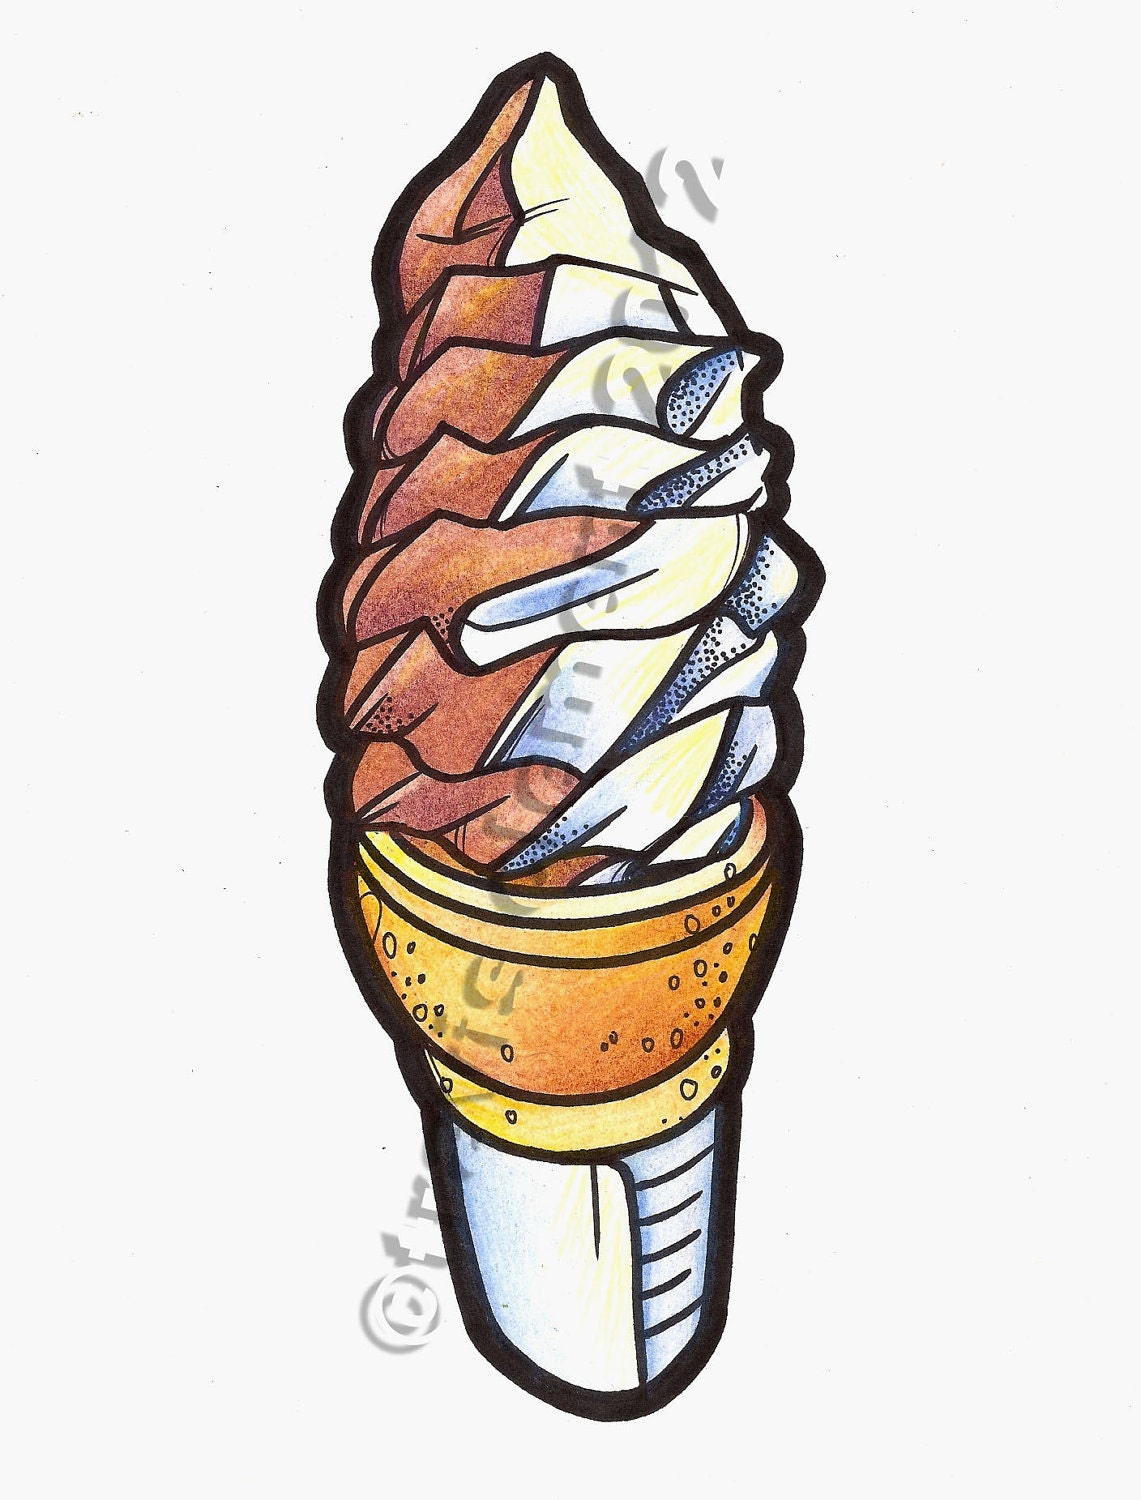 Drawn Ice Cream